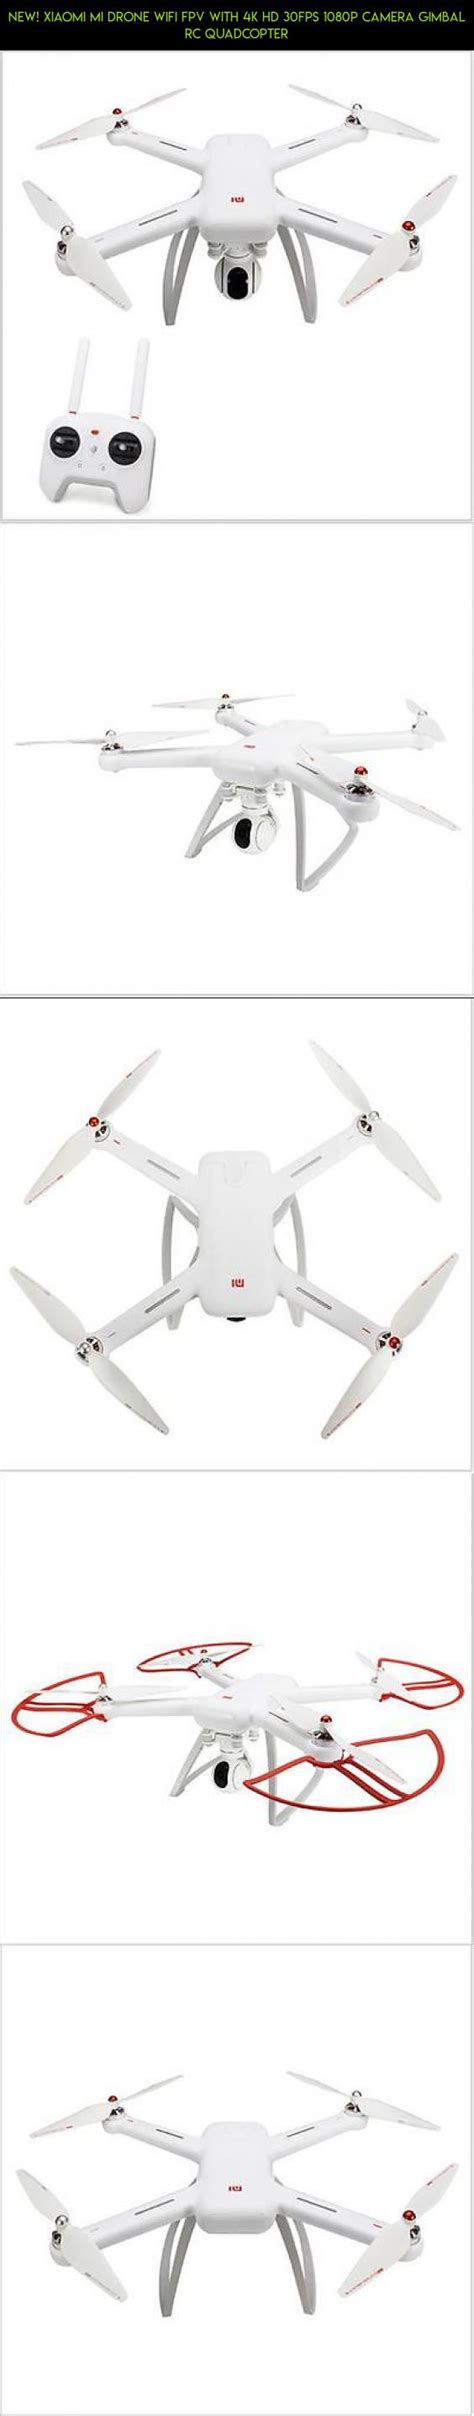 xiaomi mi drone wifi fpv   hd fps p camera gimbal rc quadcopter drone camera